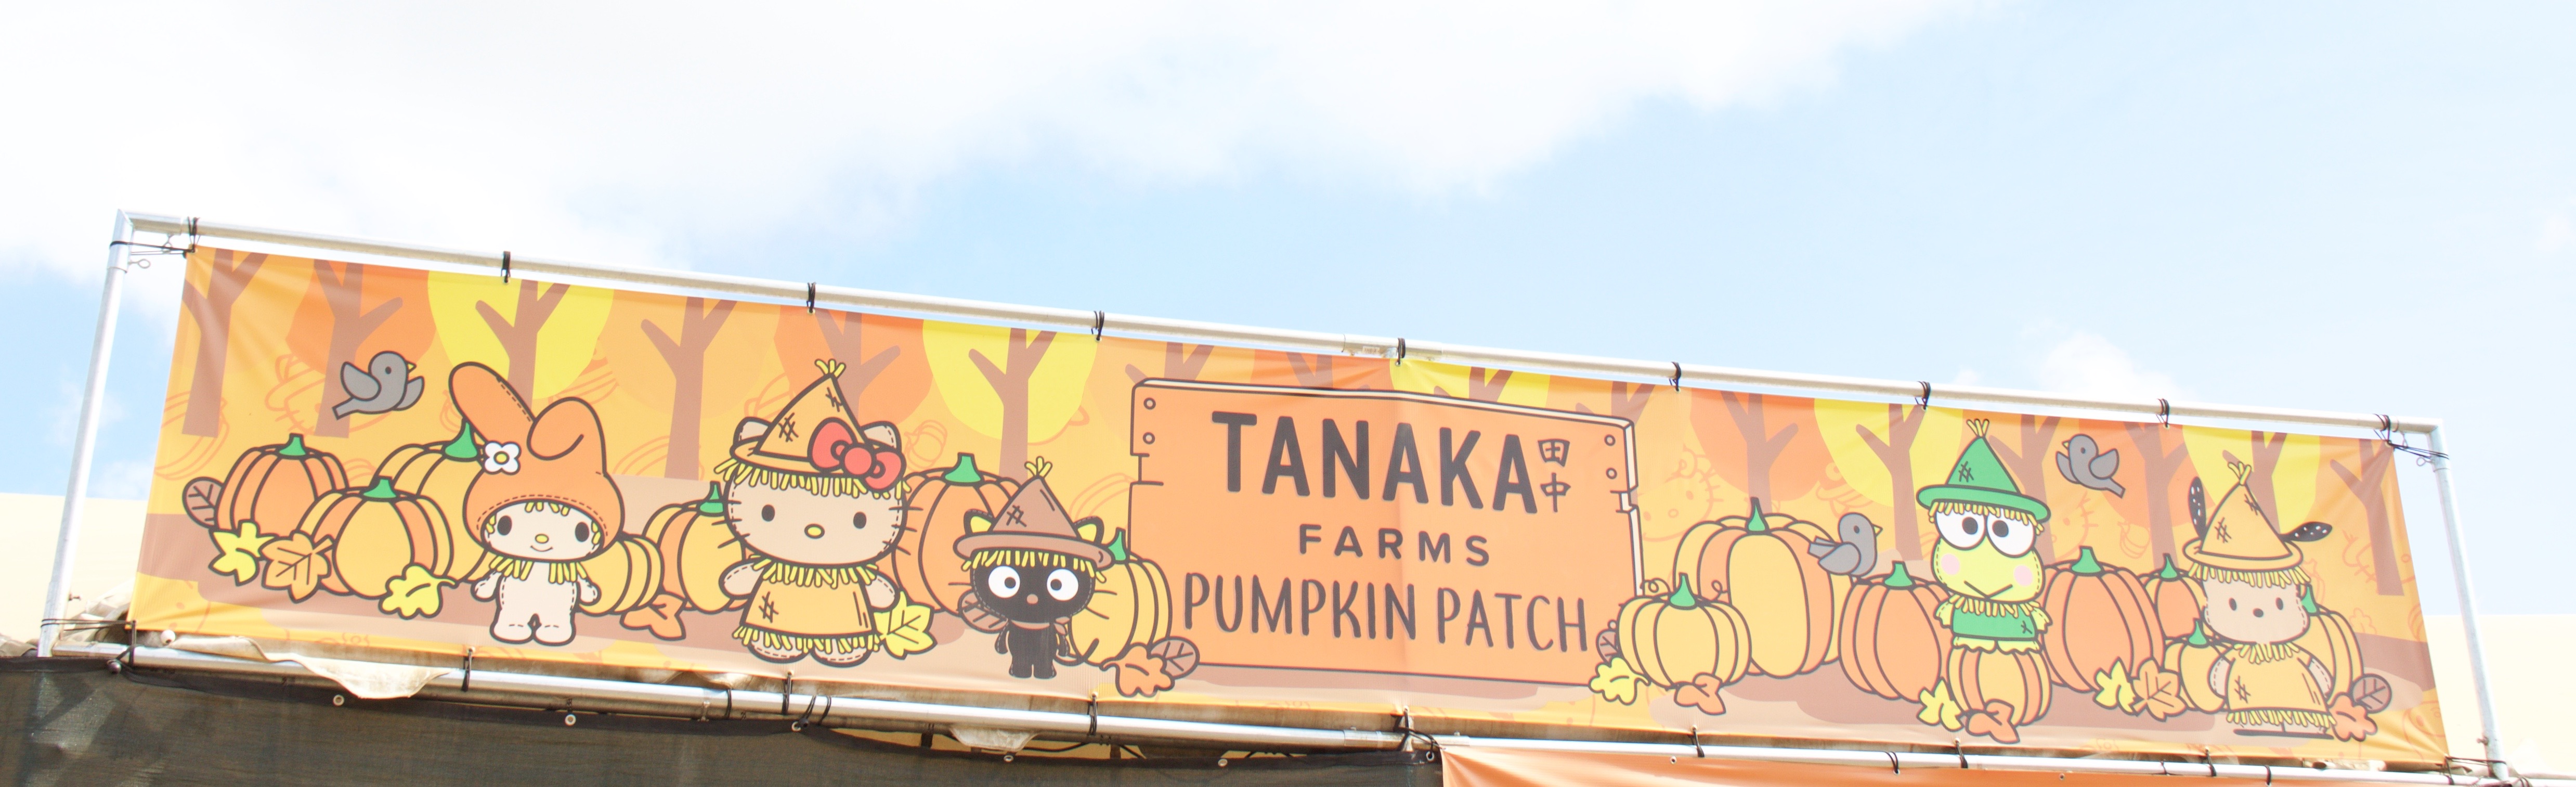 tanaka farms 2017 pumpkin patch